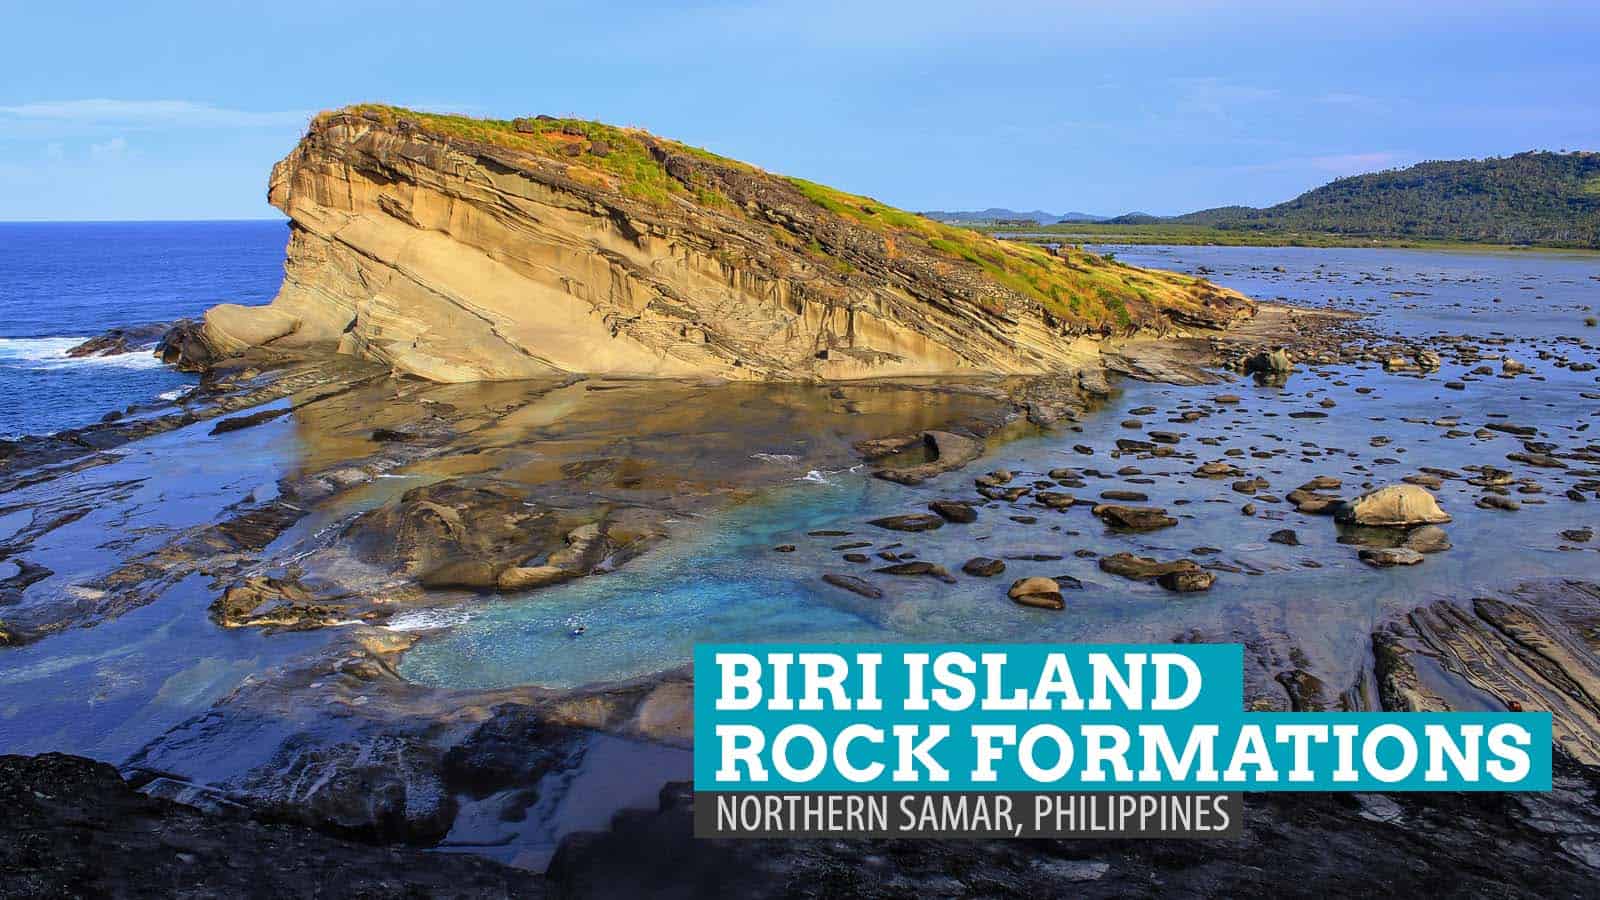 Biri Island Rock Formations: Northern Samar, Philippines